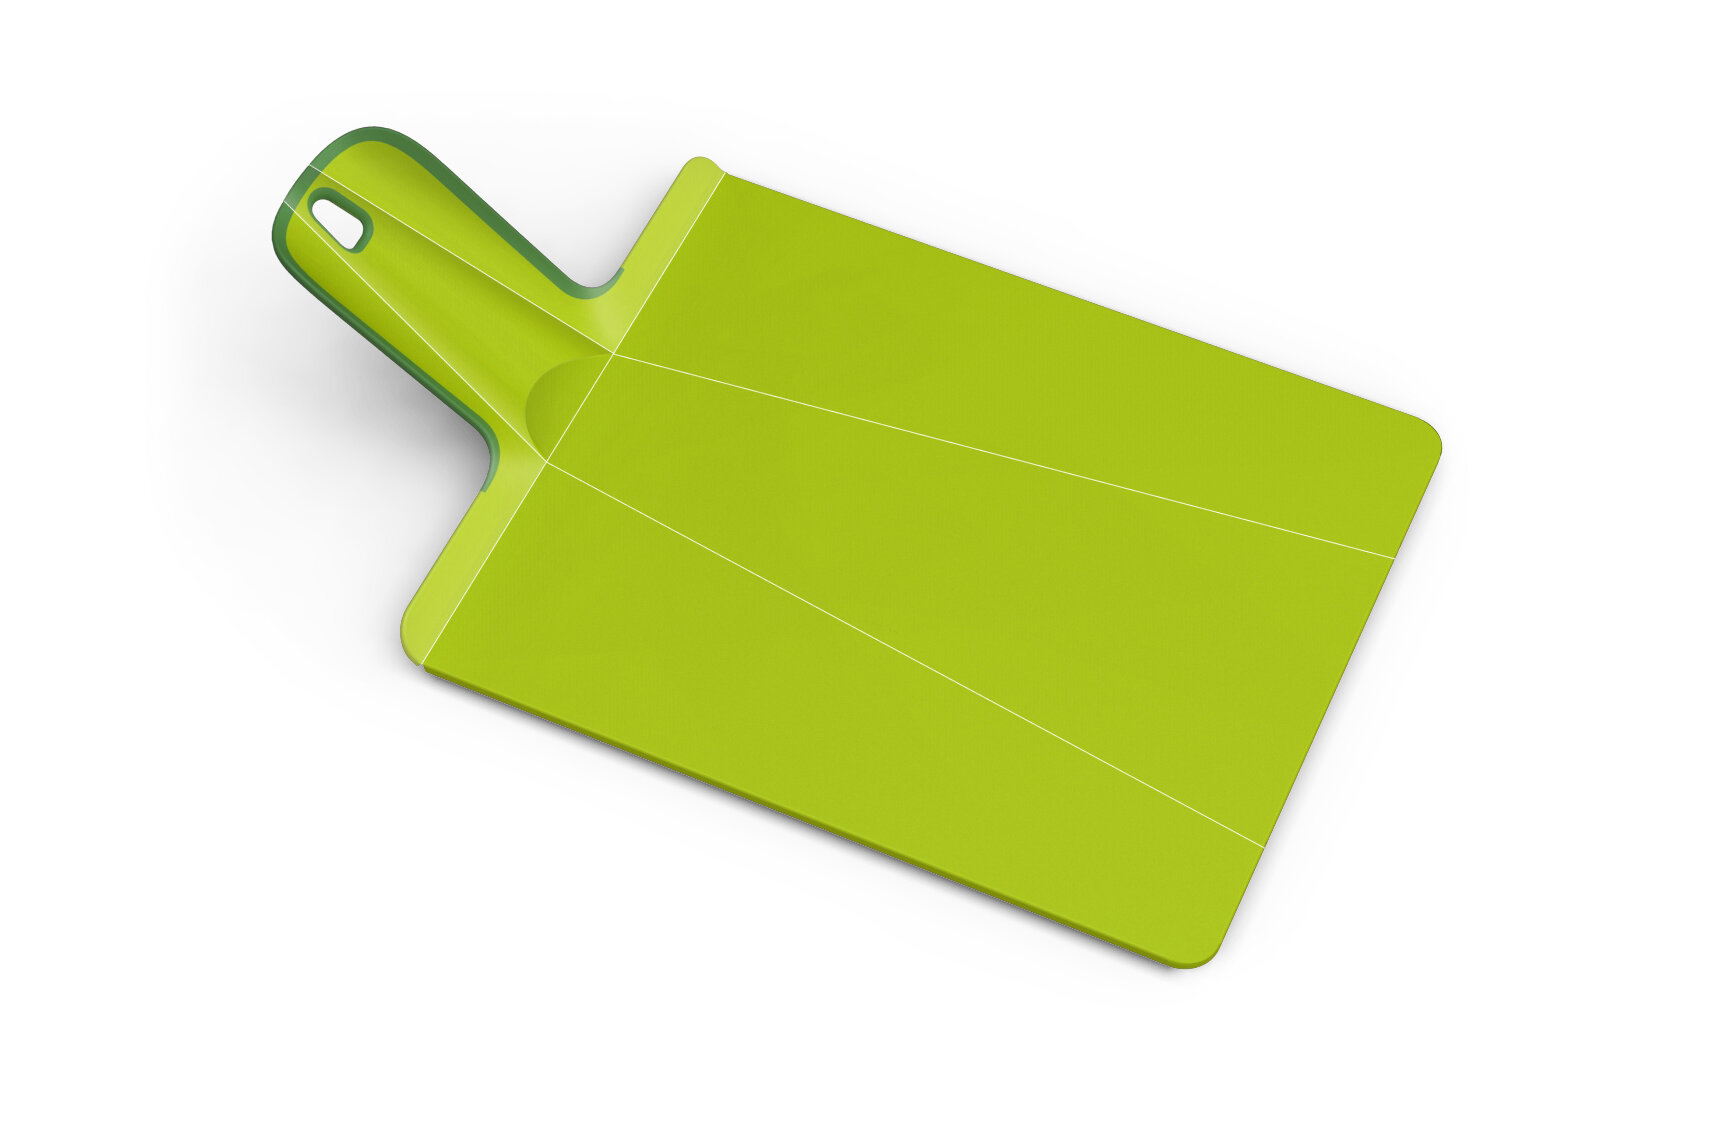 green chopping board